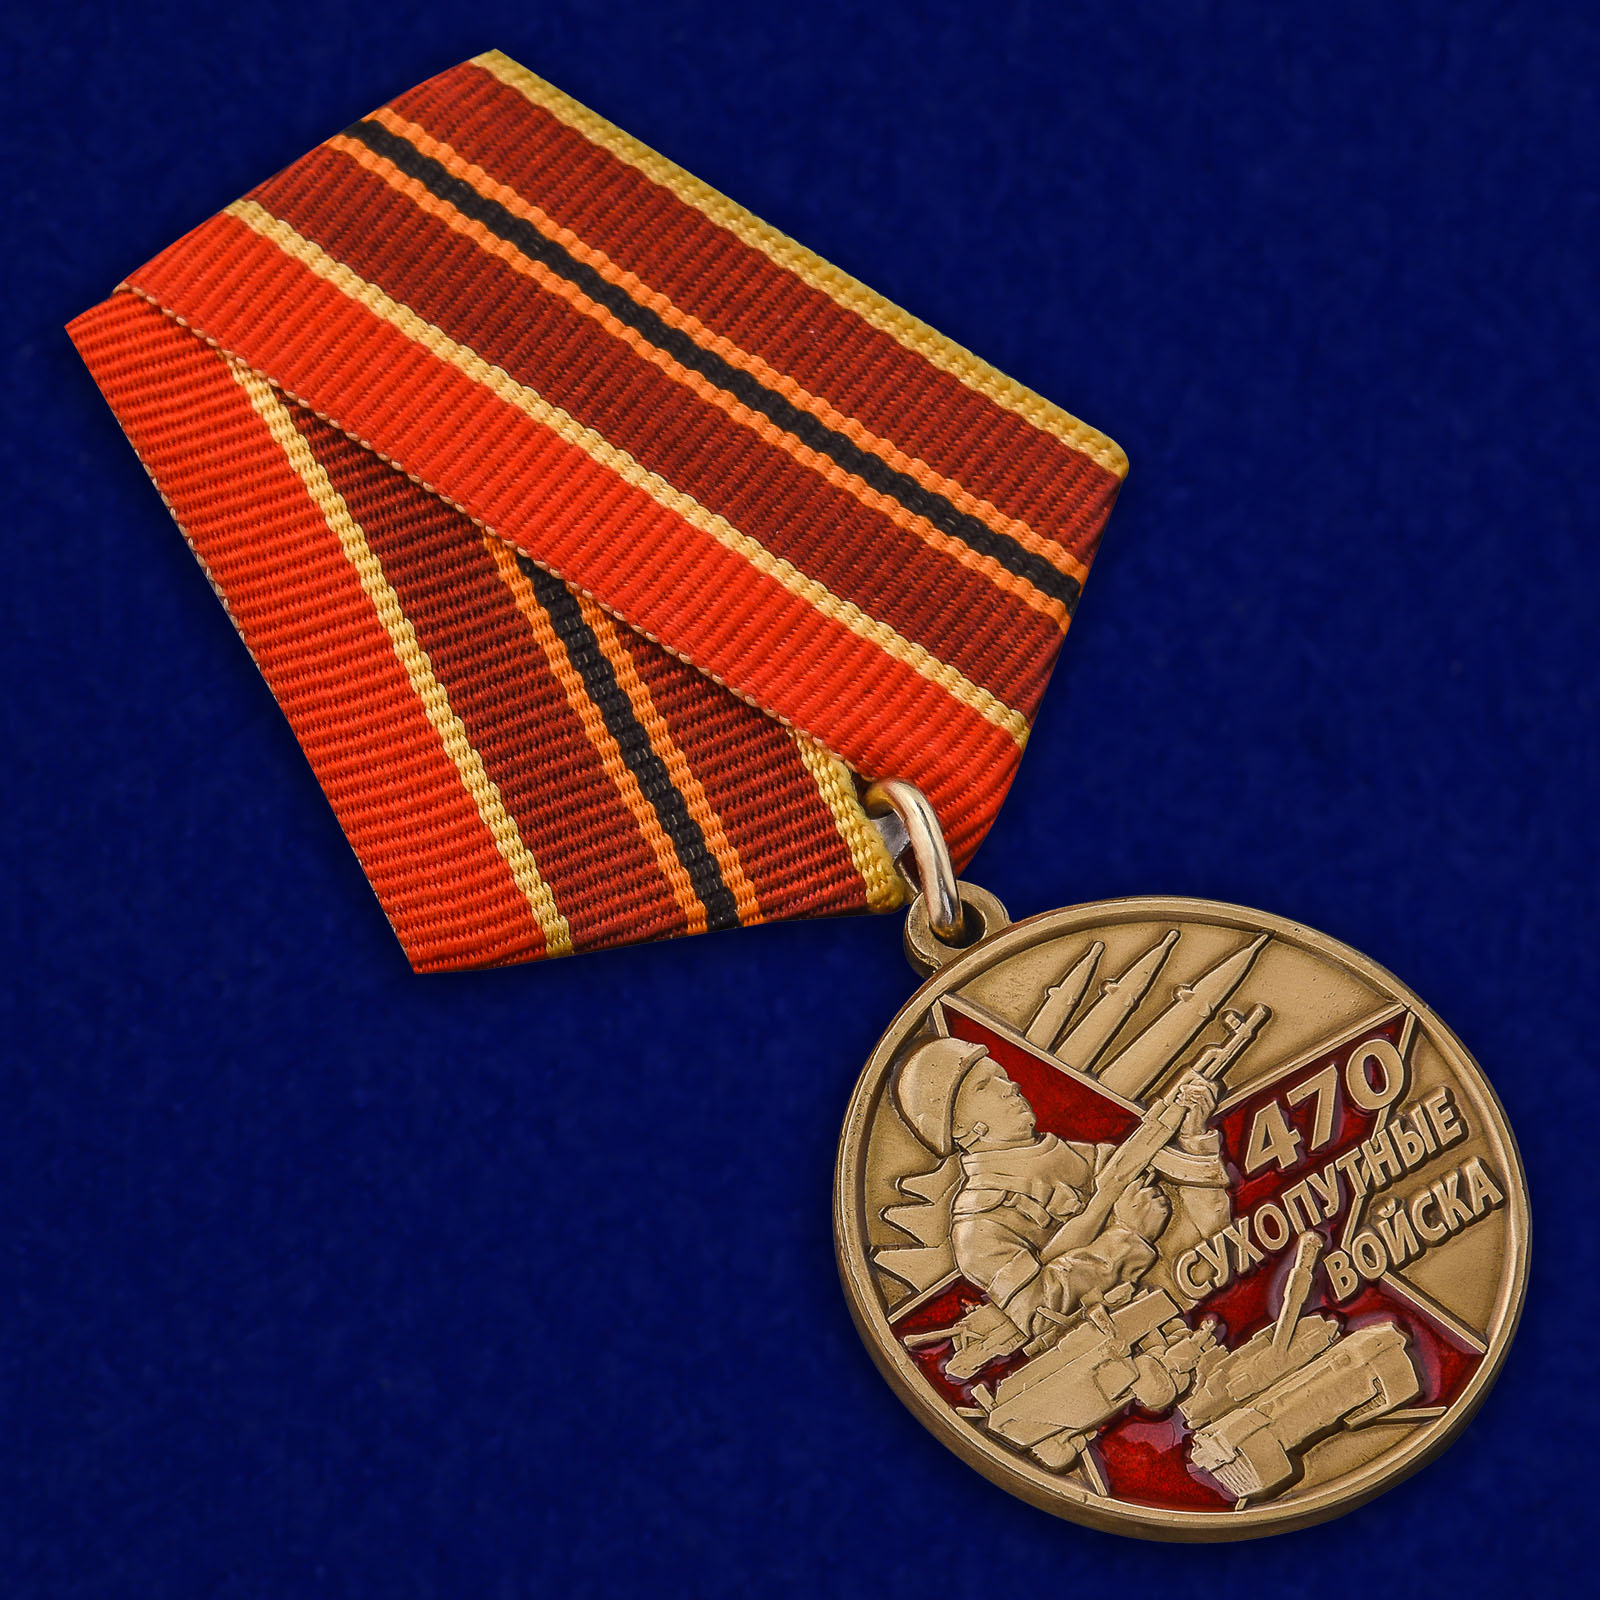 Памятная медаль "470 лет Сухопутным войскам" 